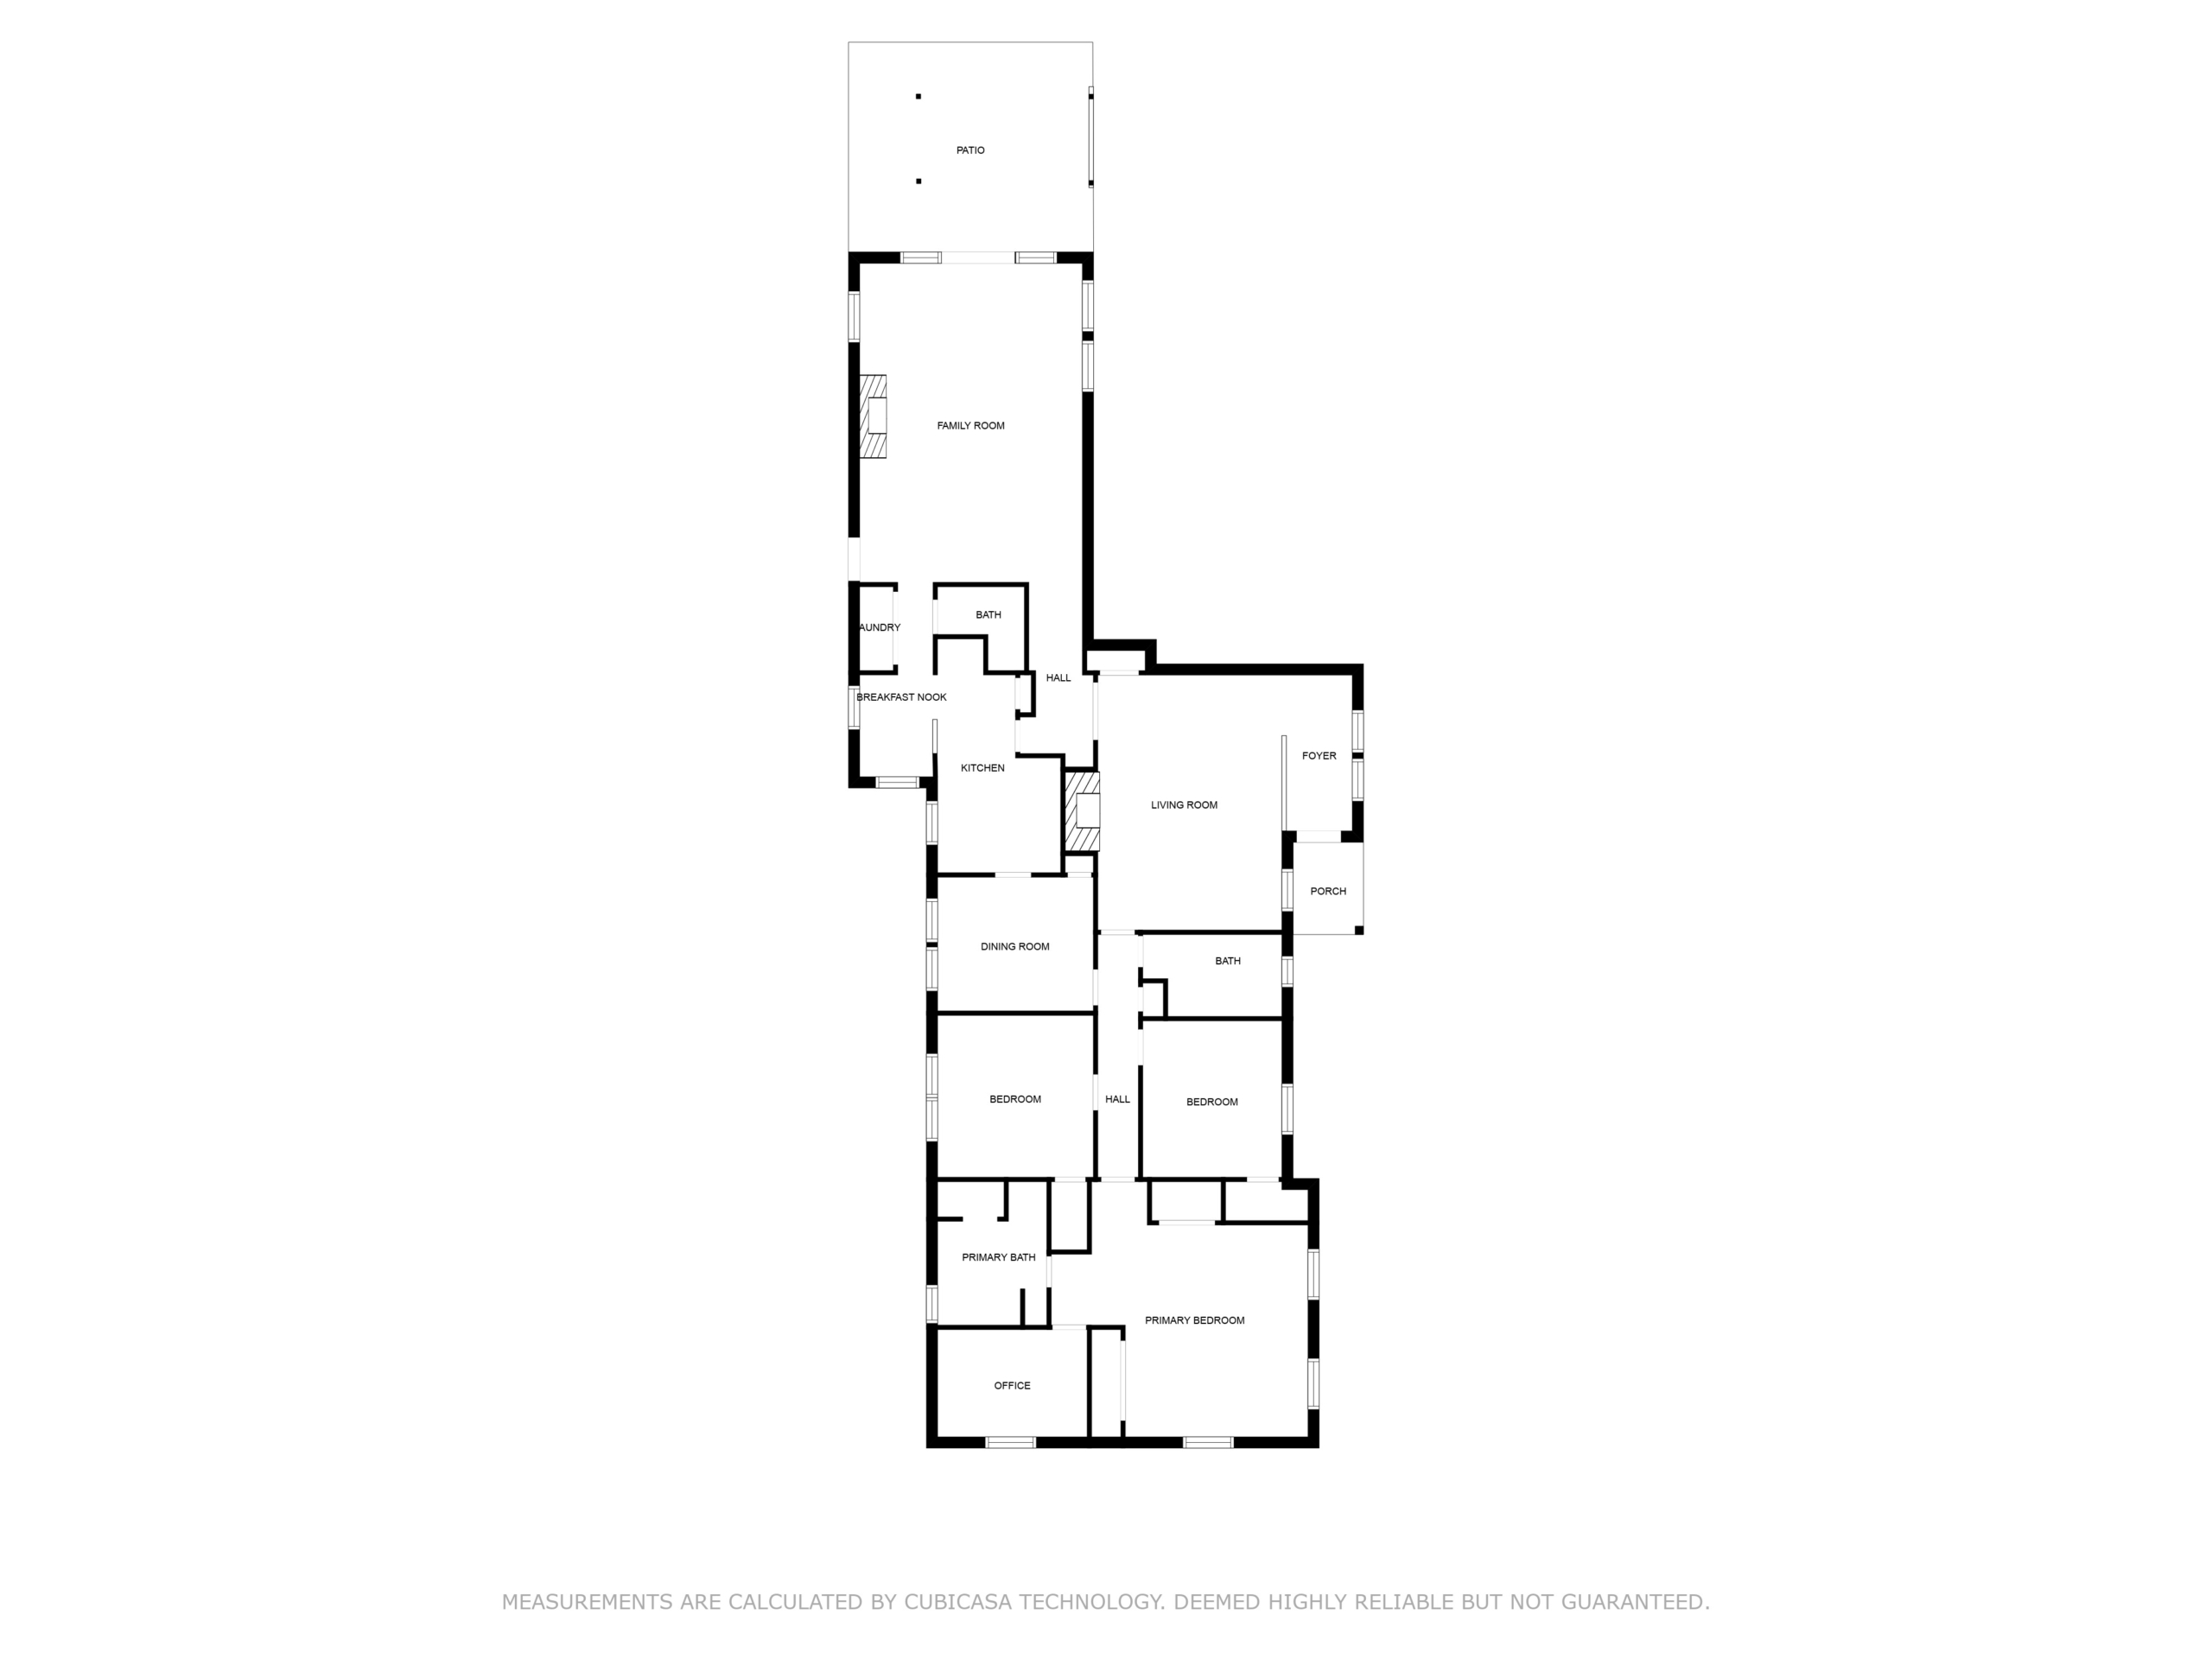 213 Colorin floor plan